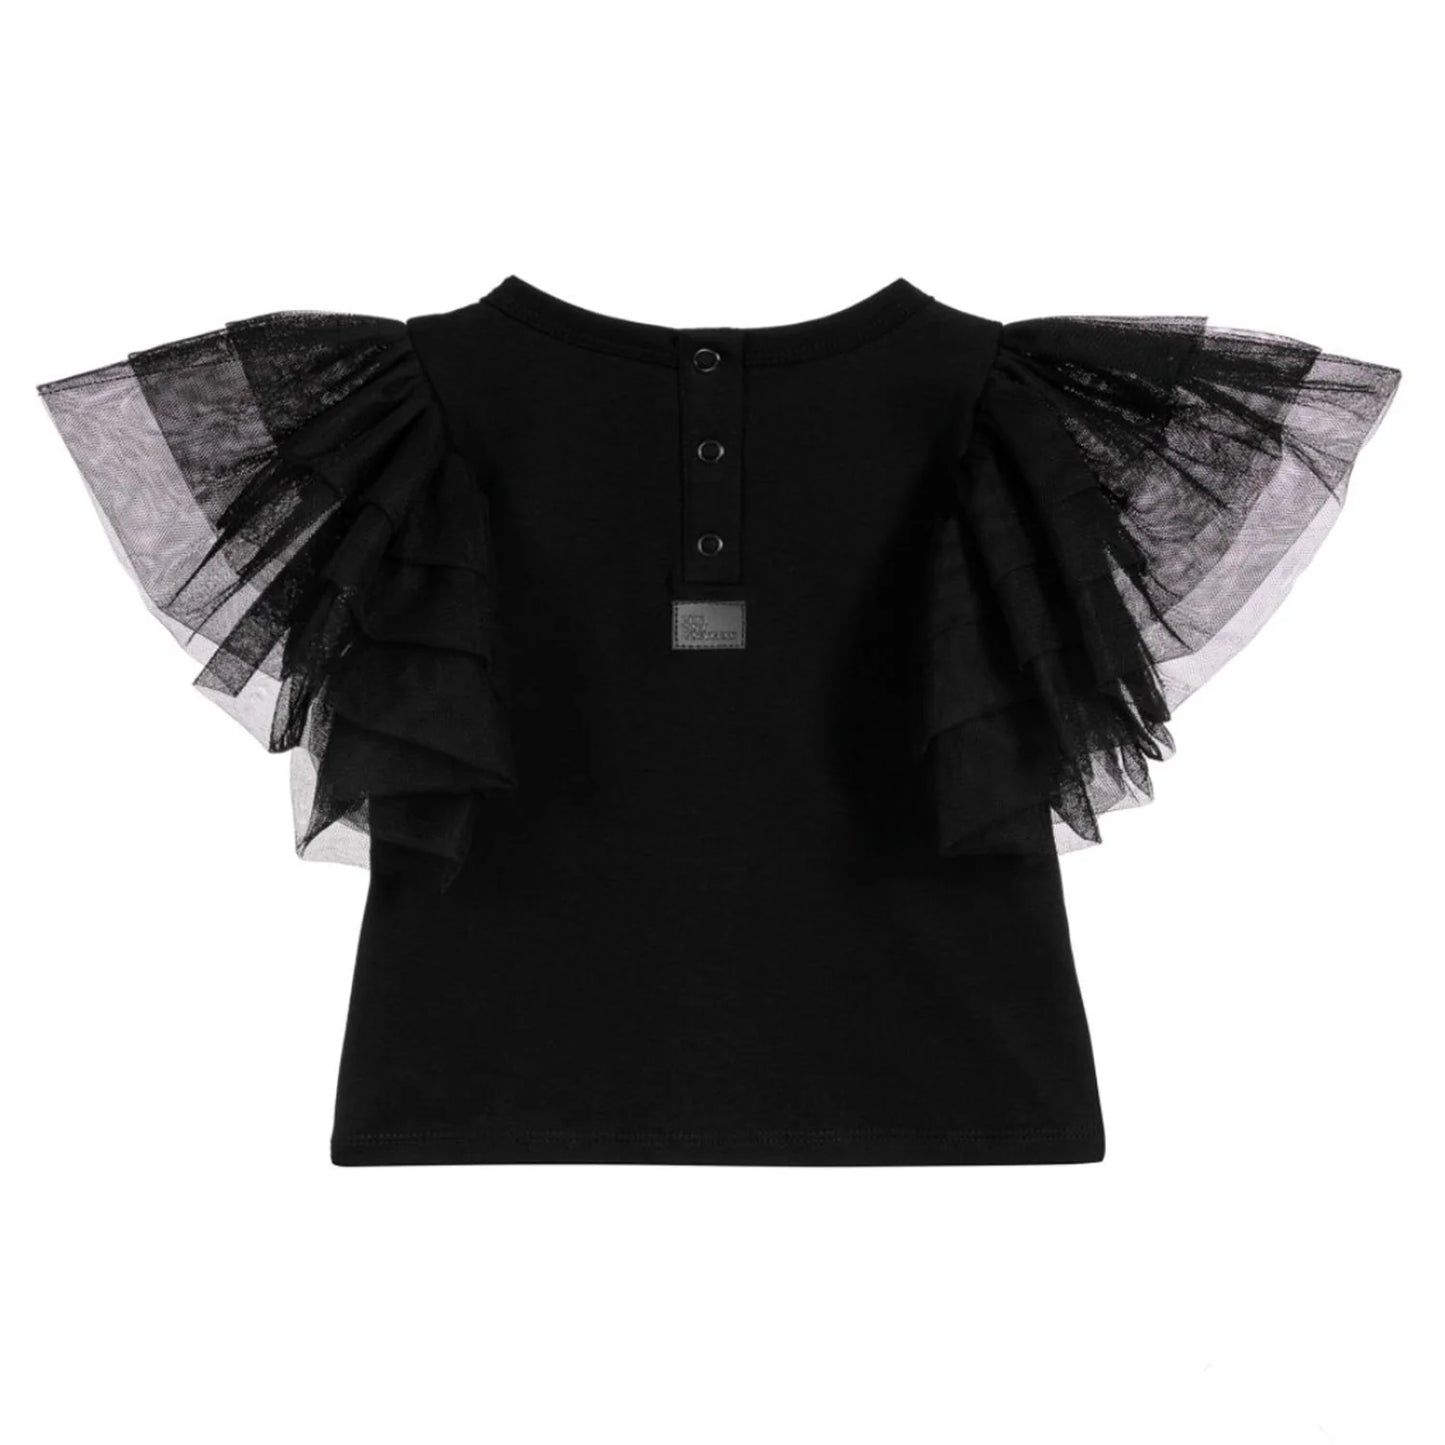 Tiny Wings T-shirt - Black